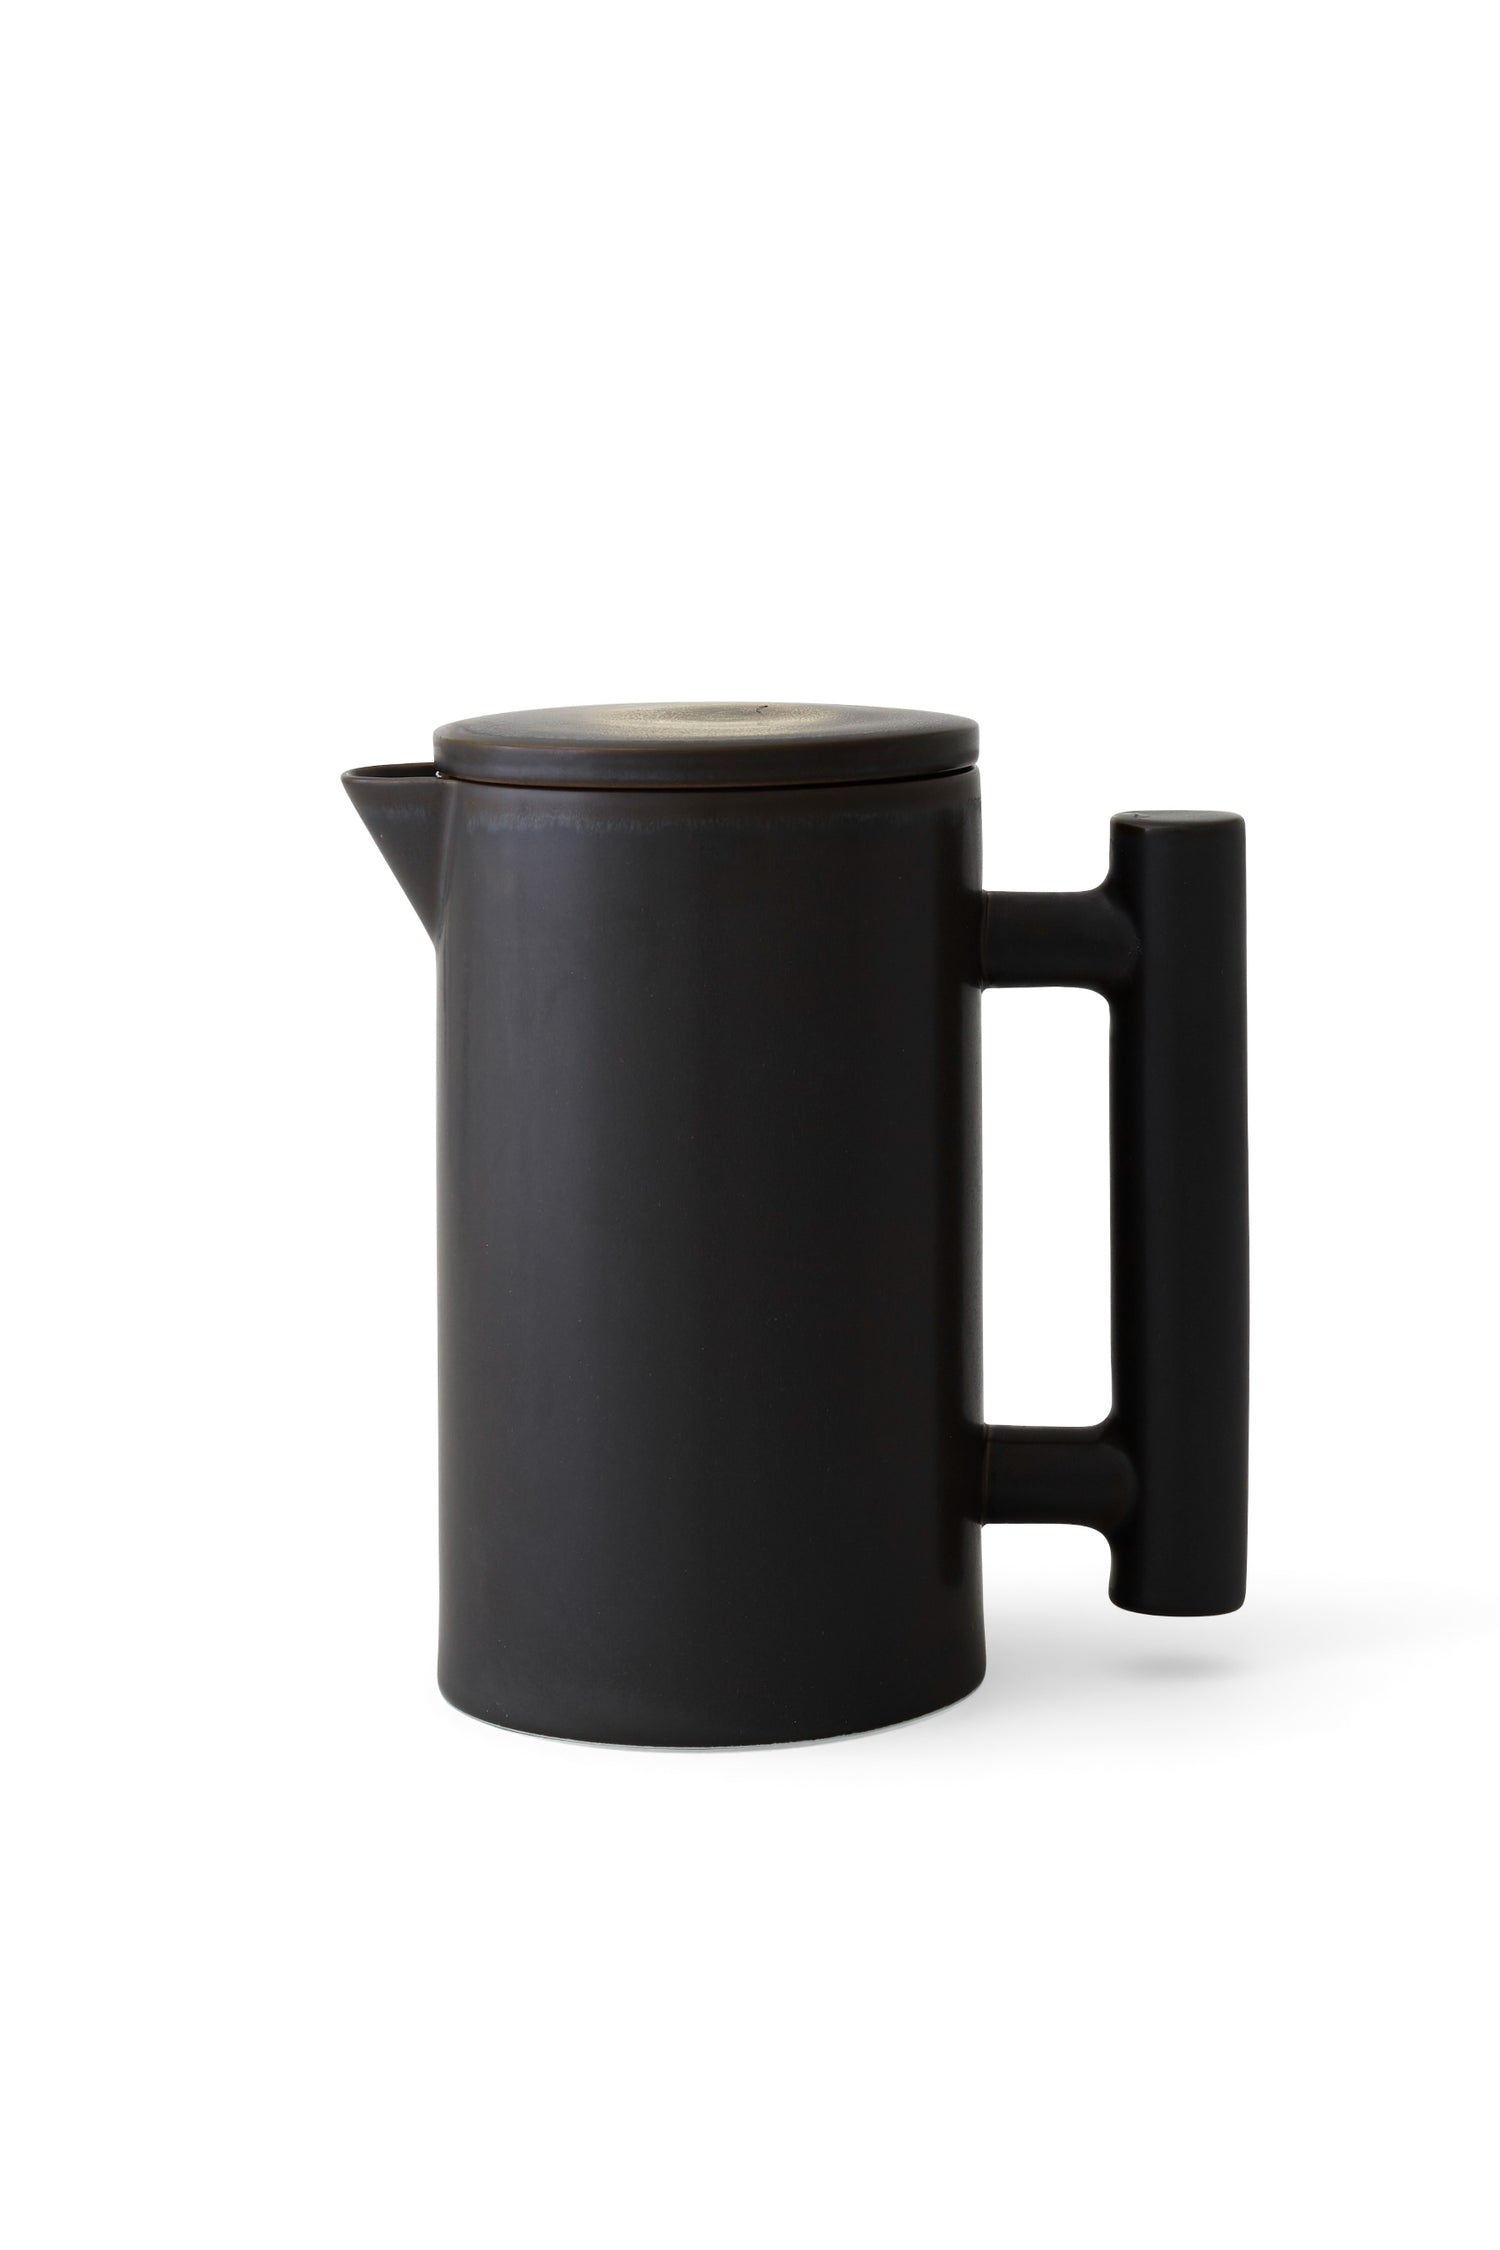 Tea coffee brewing pot ceramic speckled dark brown minimal look